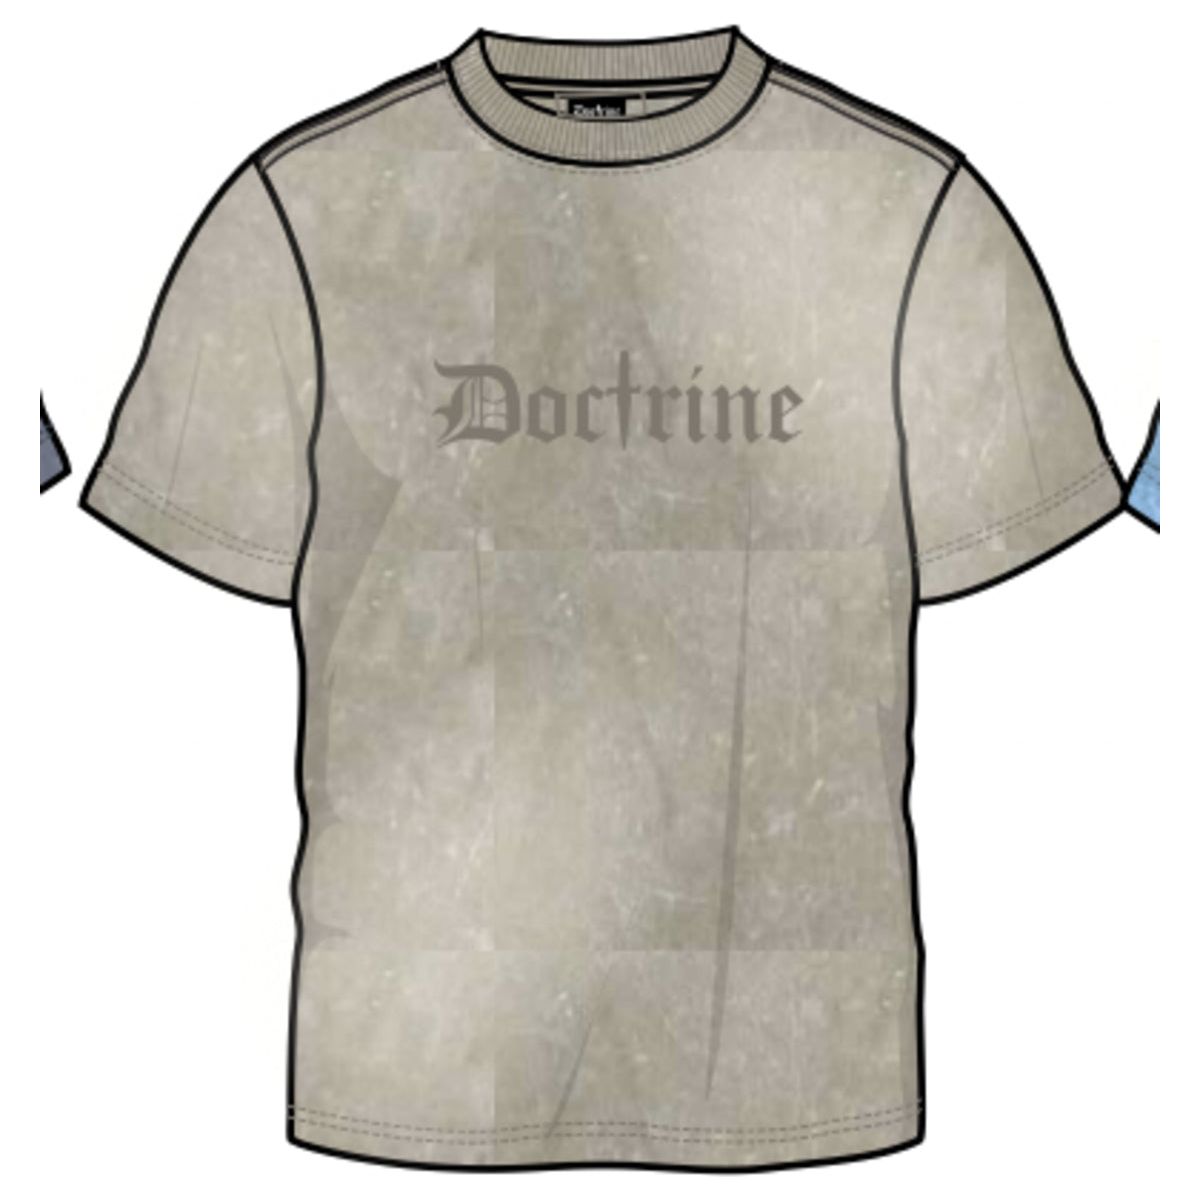 Doctrine Signature Tee - Sandstone Wash